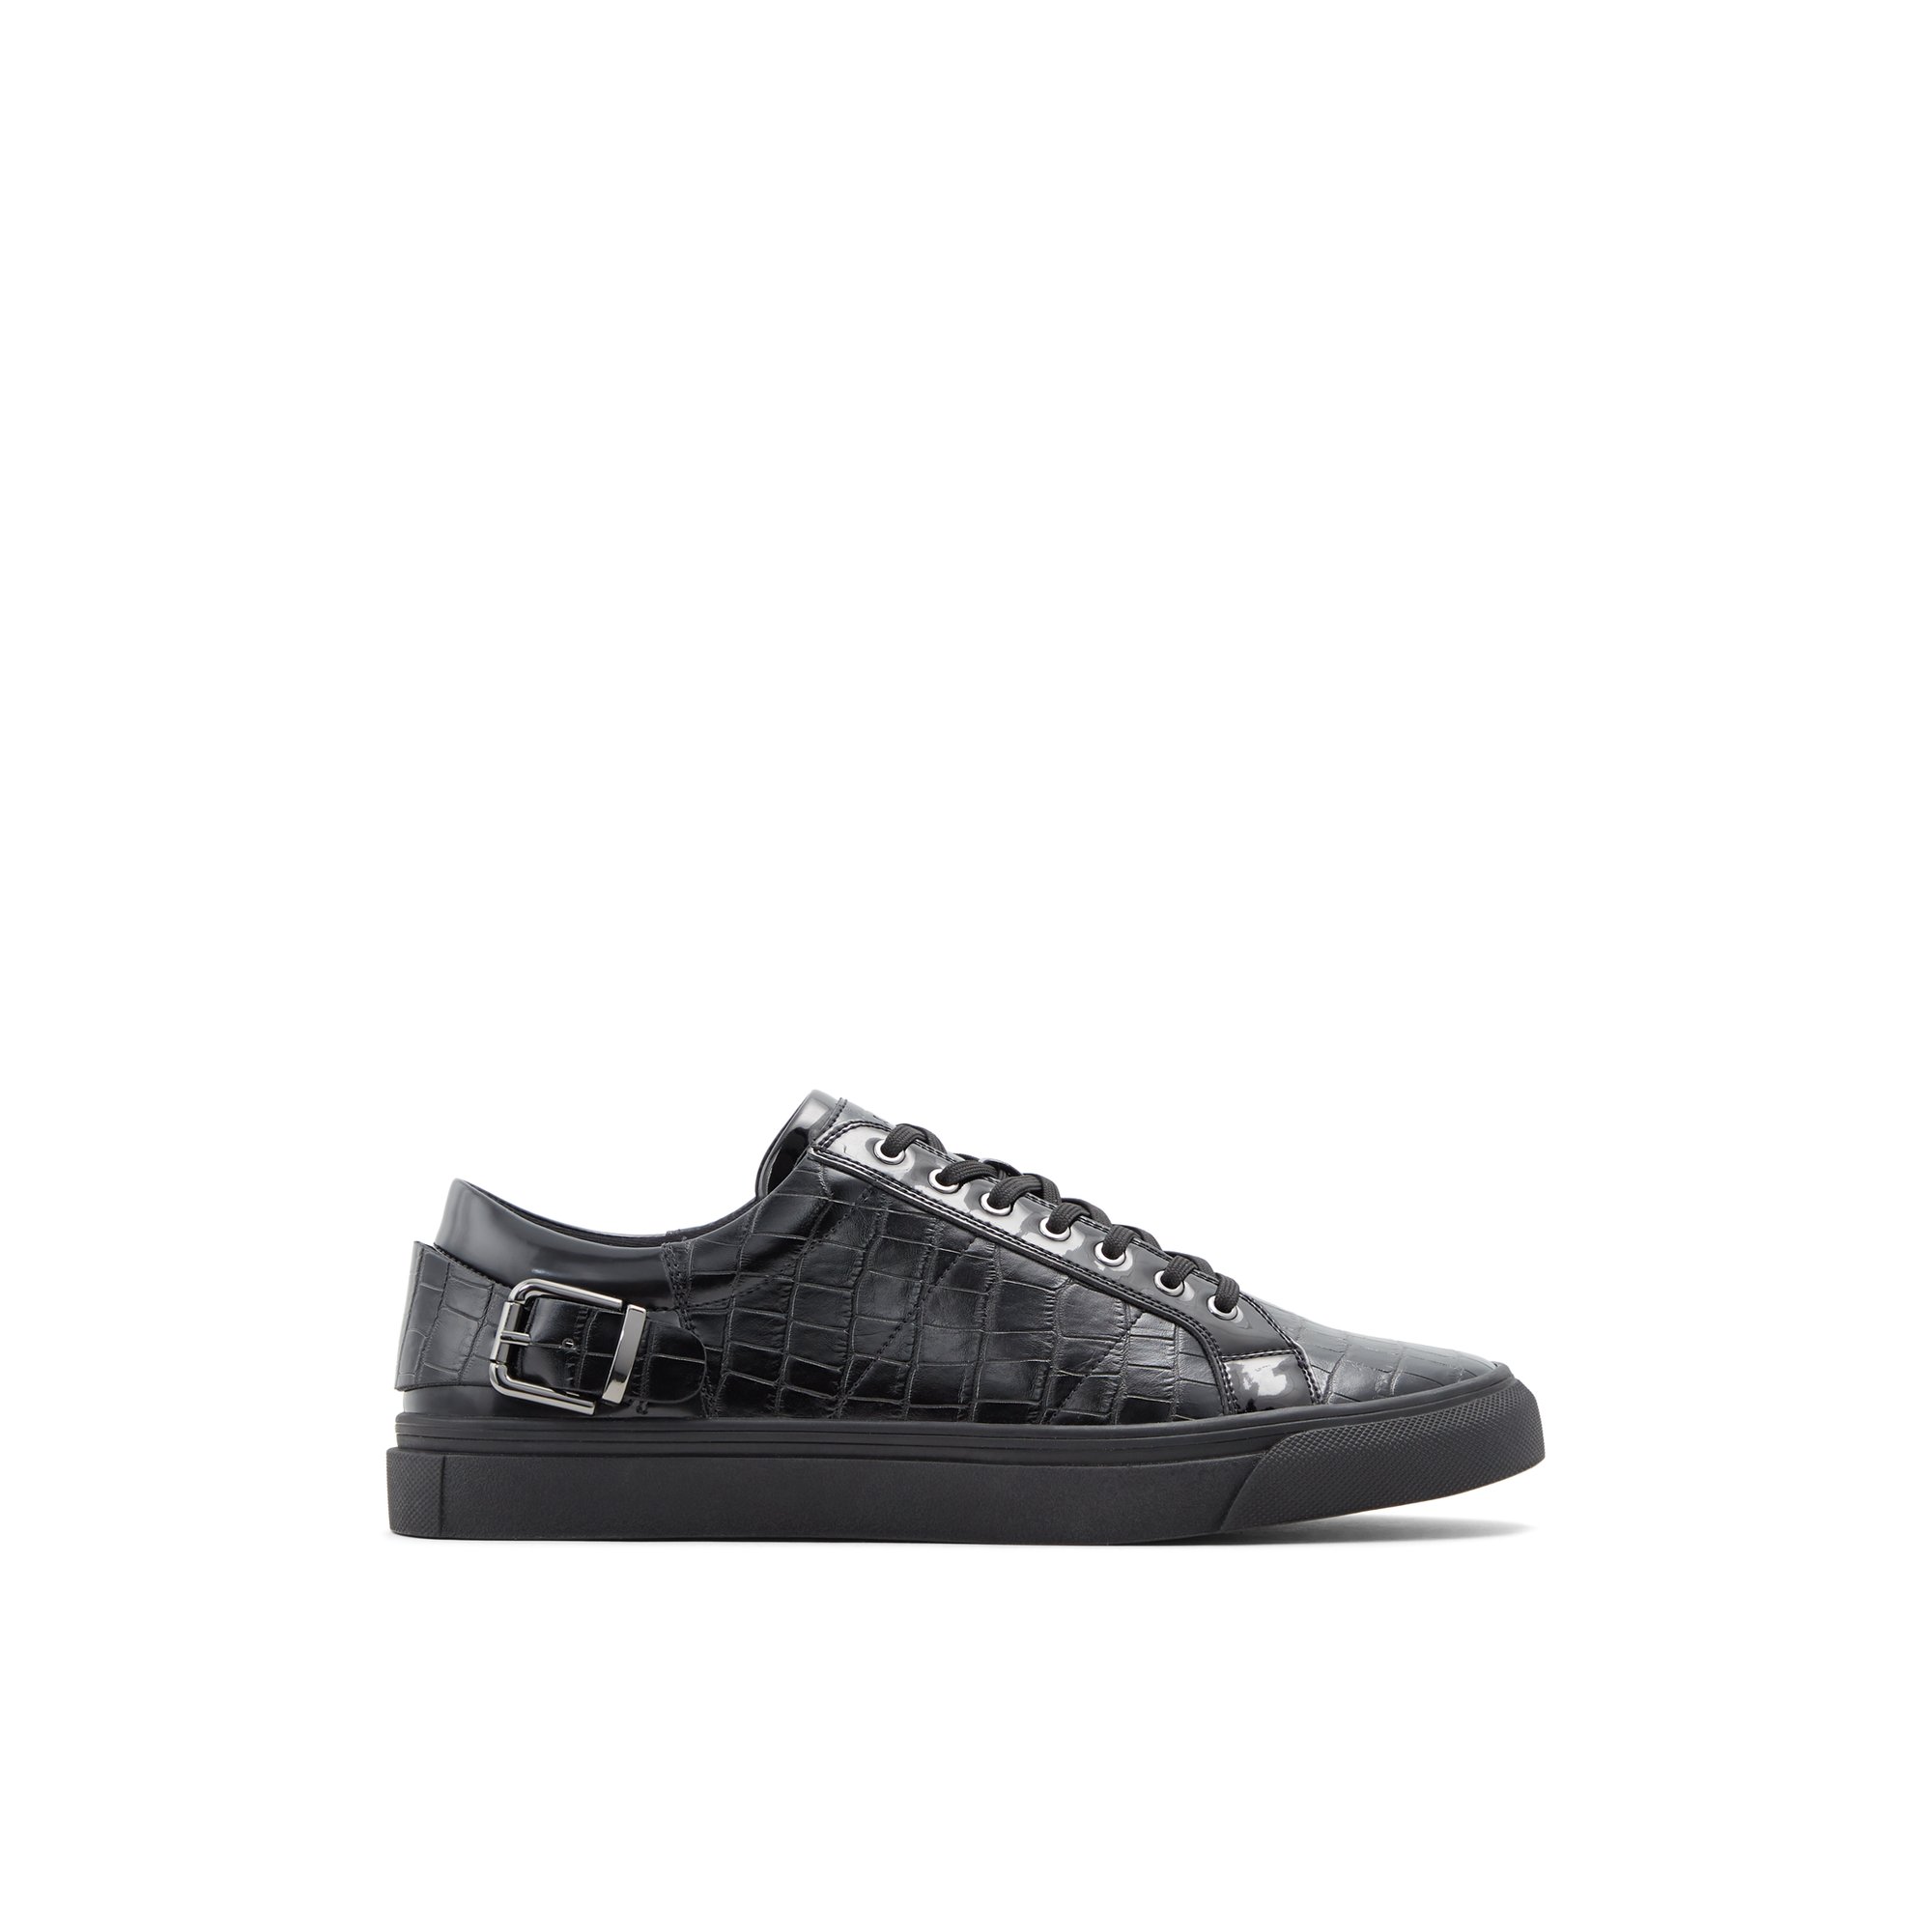 Image of ALDO Himrich - Men's Low Top Sneakers - Black, Size 8